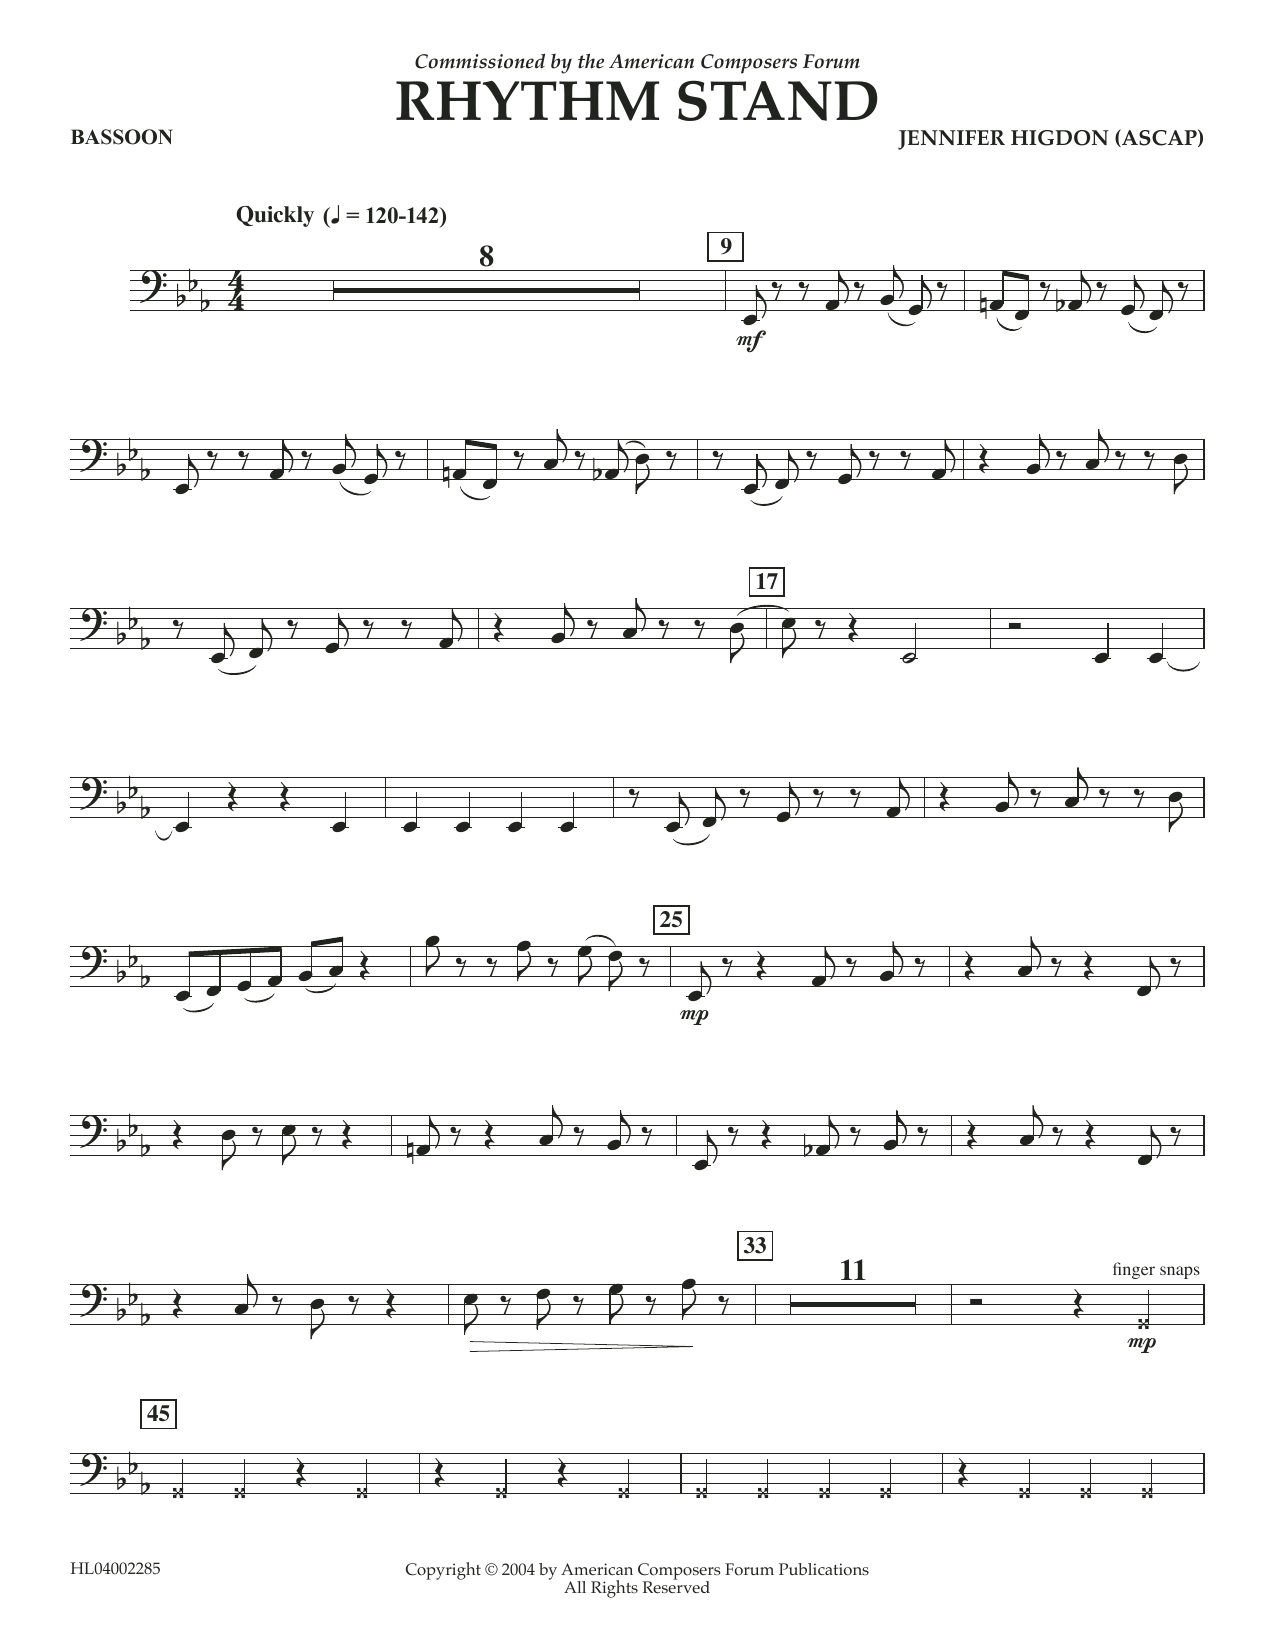 Jennifer Higdon Rhythm Stand - Bassoon Sheet Music Notes & Chords for Concert Band - Download or Print PDF